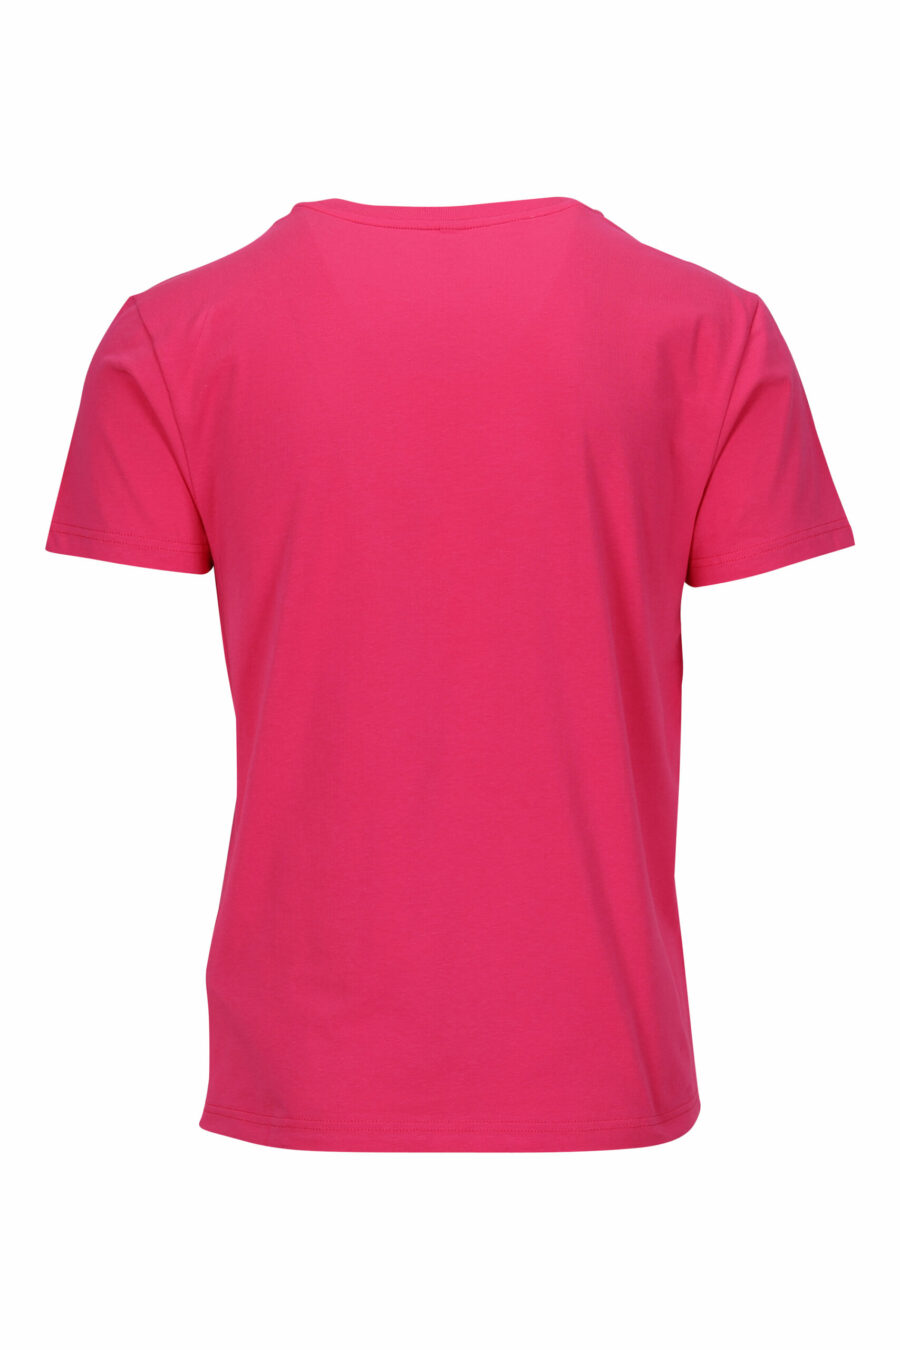 Camiseta fucsia con minilogo "swim" - 667113673301 1 scaled